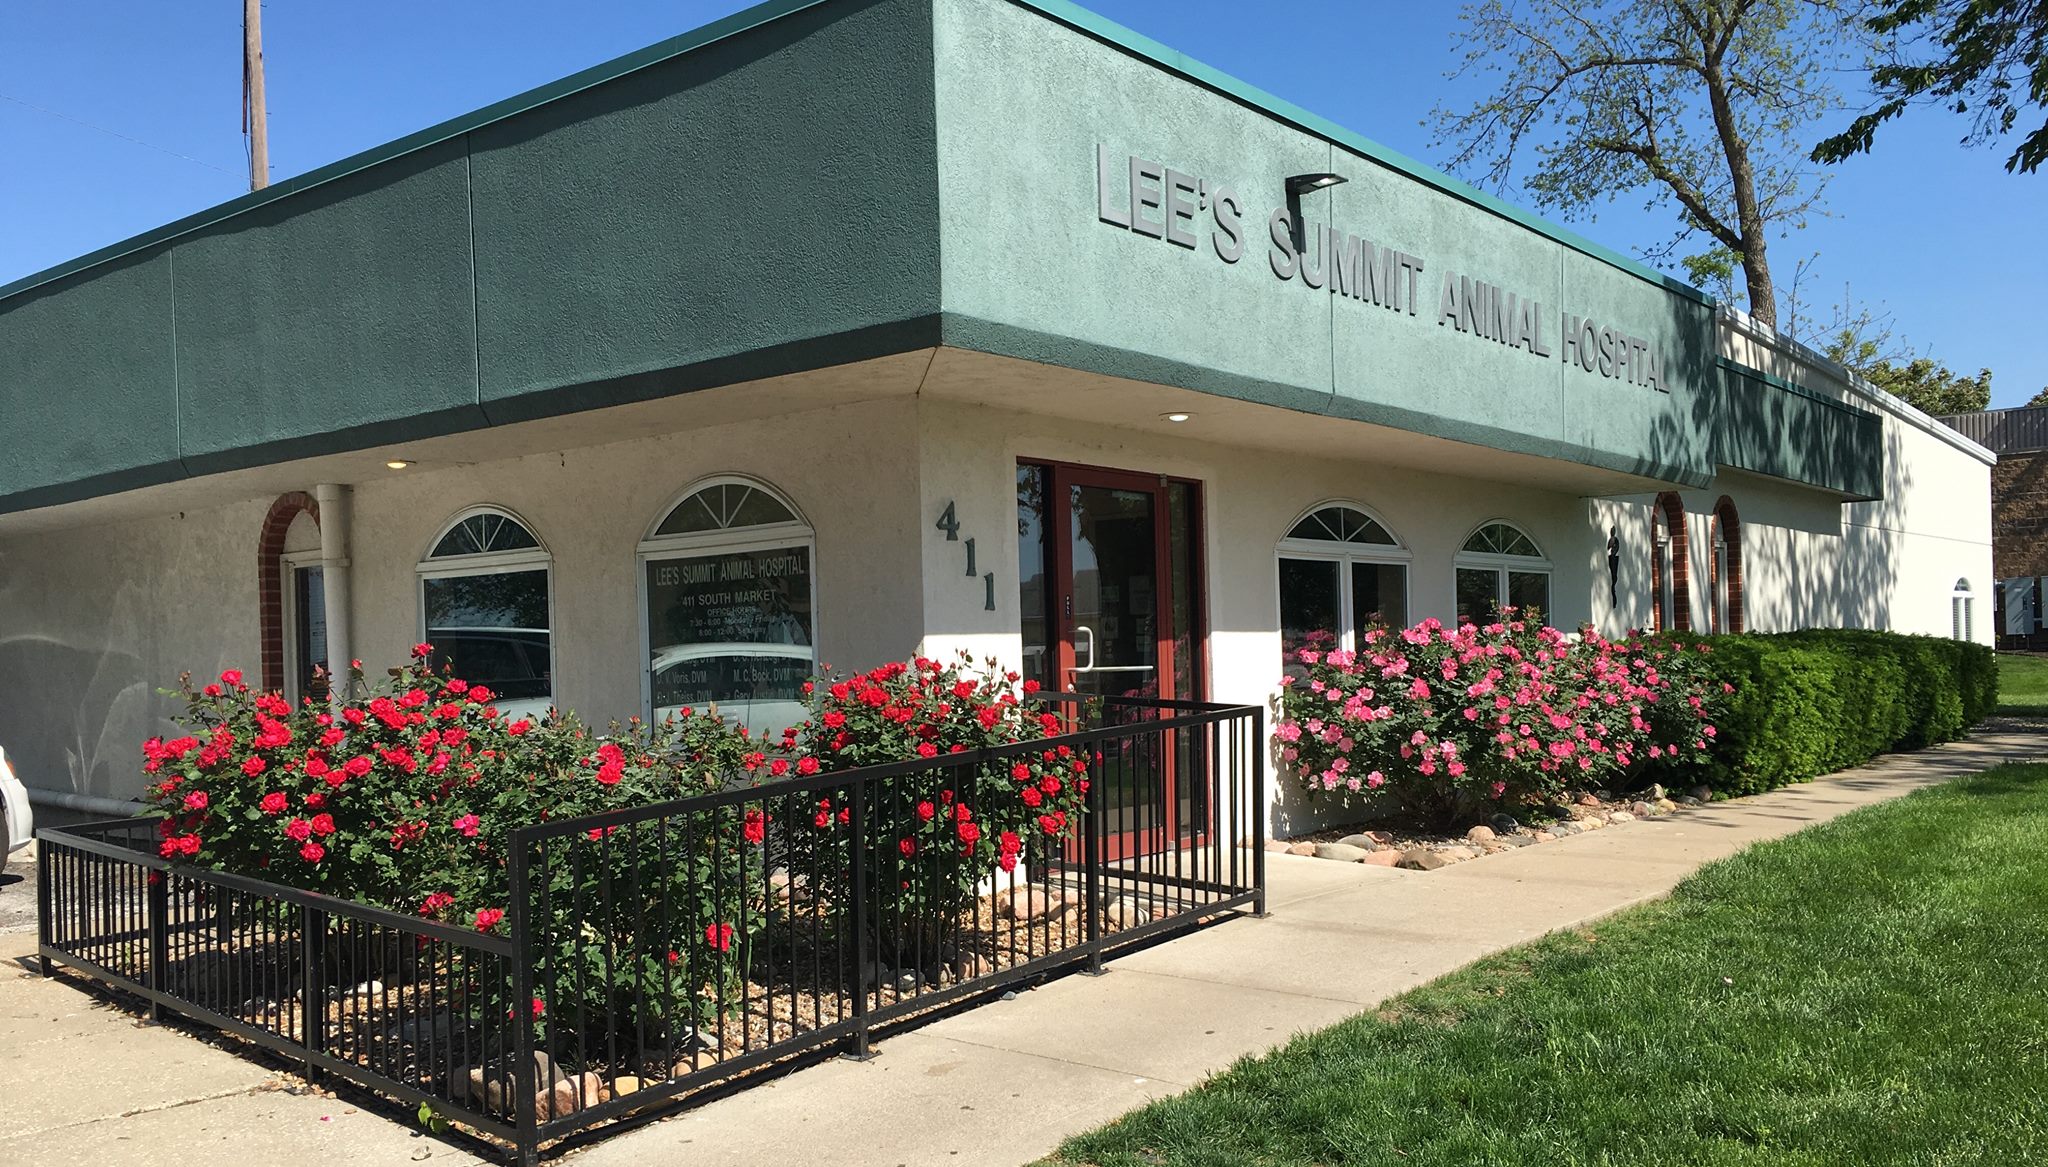 6 Top Rated Veterinarians In Lees Summit, Missouri | Best Reviewed Experts